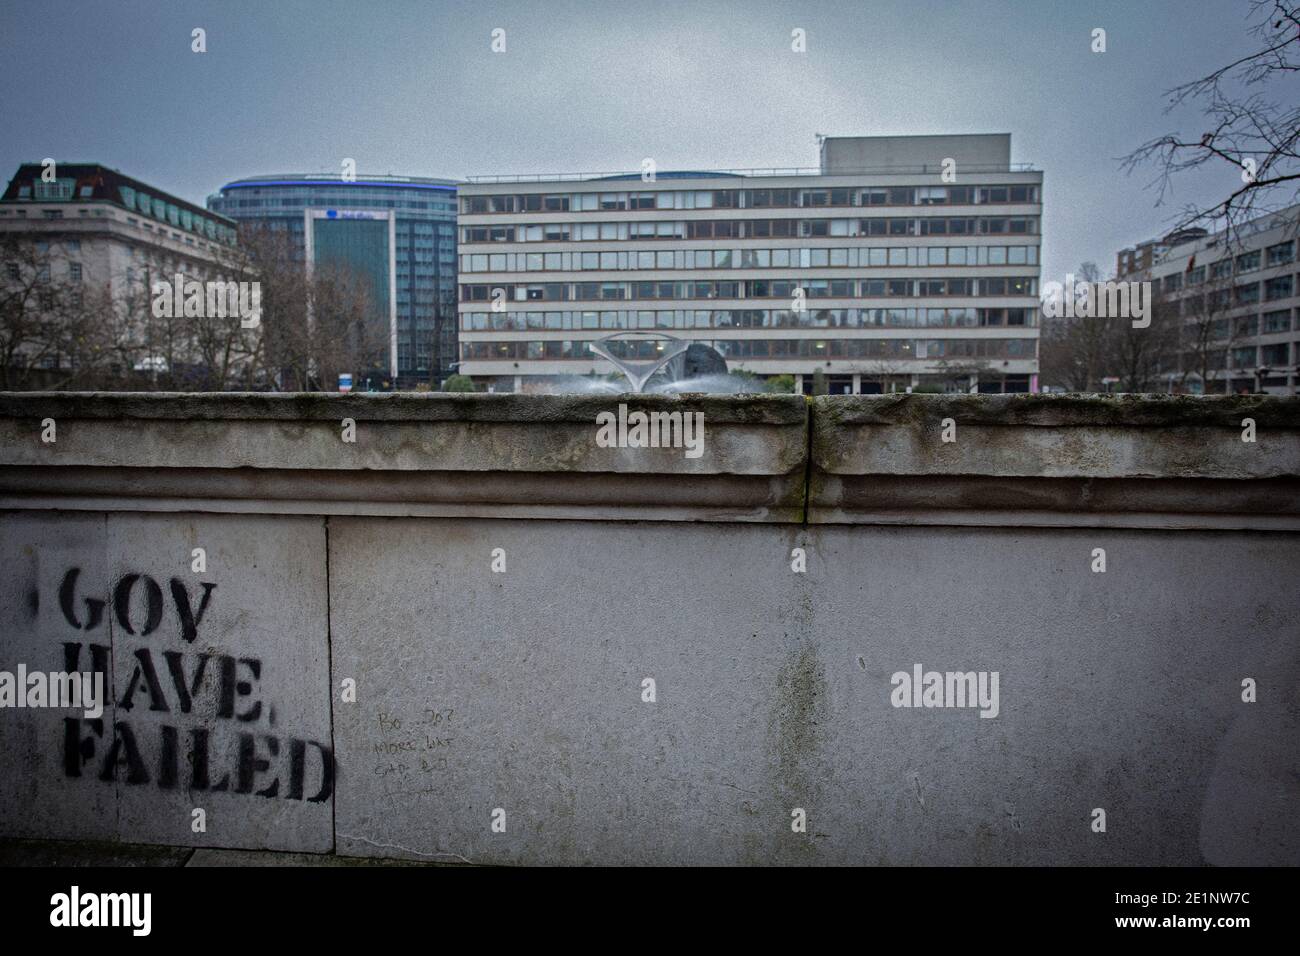 Anti-Regierungs-Graffiti markiert eine Wand vor dem St. Thomas' Hospital in London, England. Stockfoto